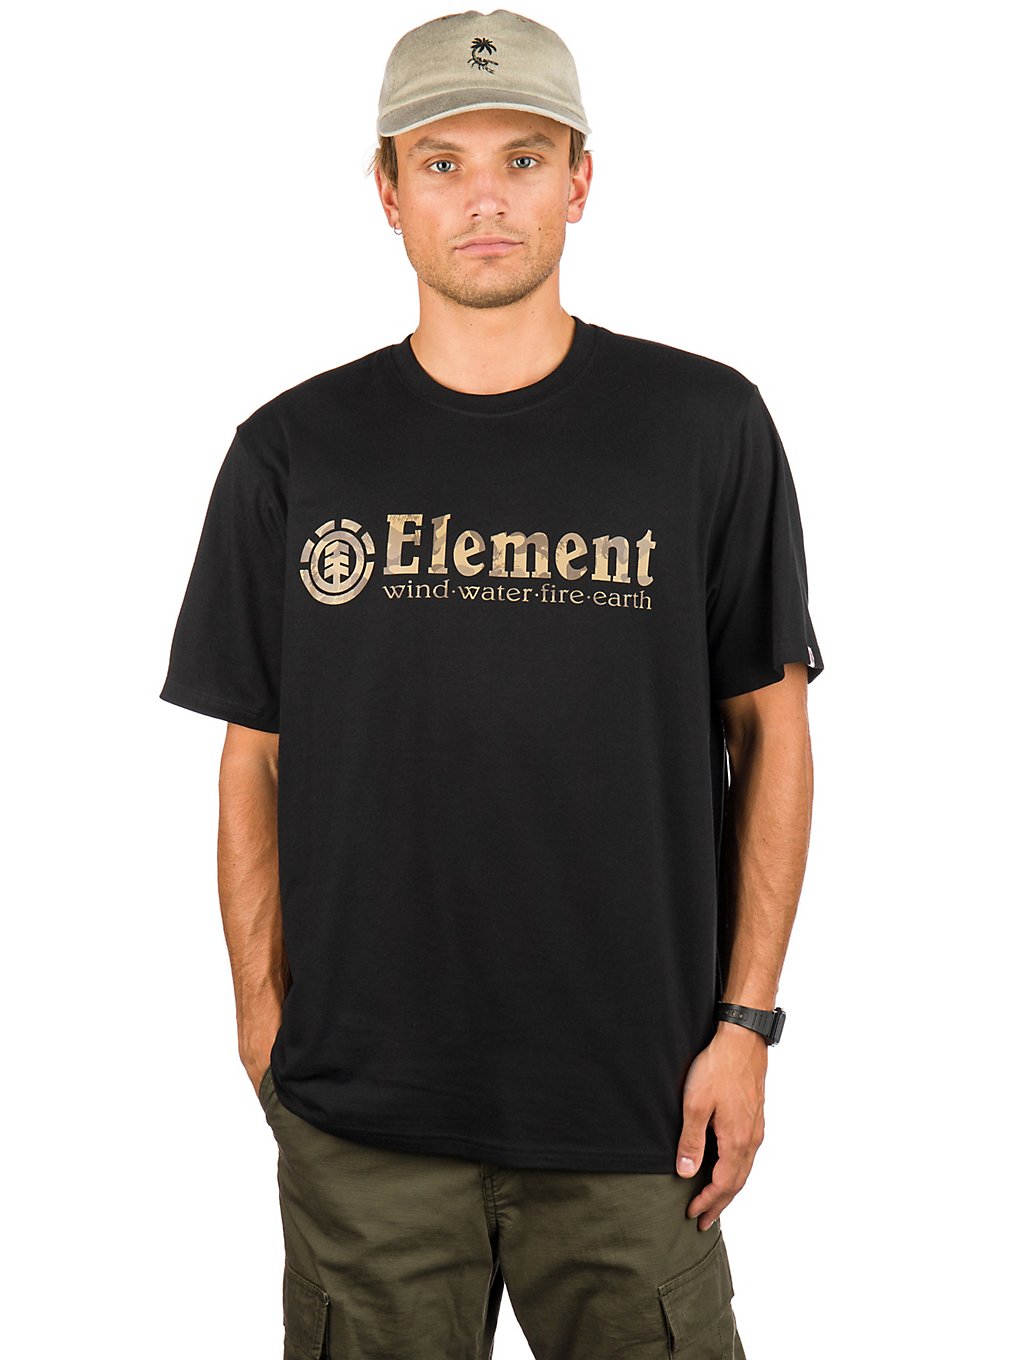 Element scope t-shirt musta, element